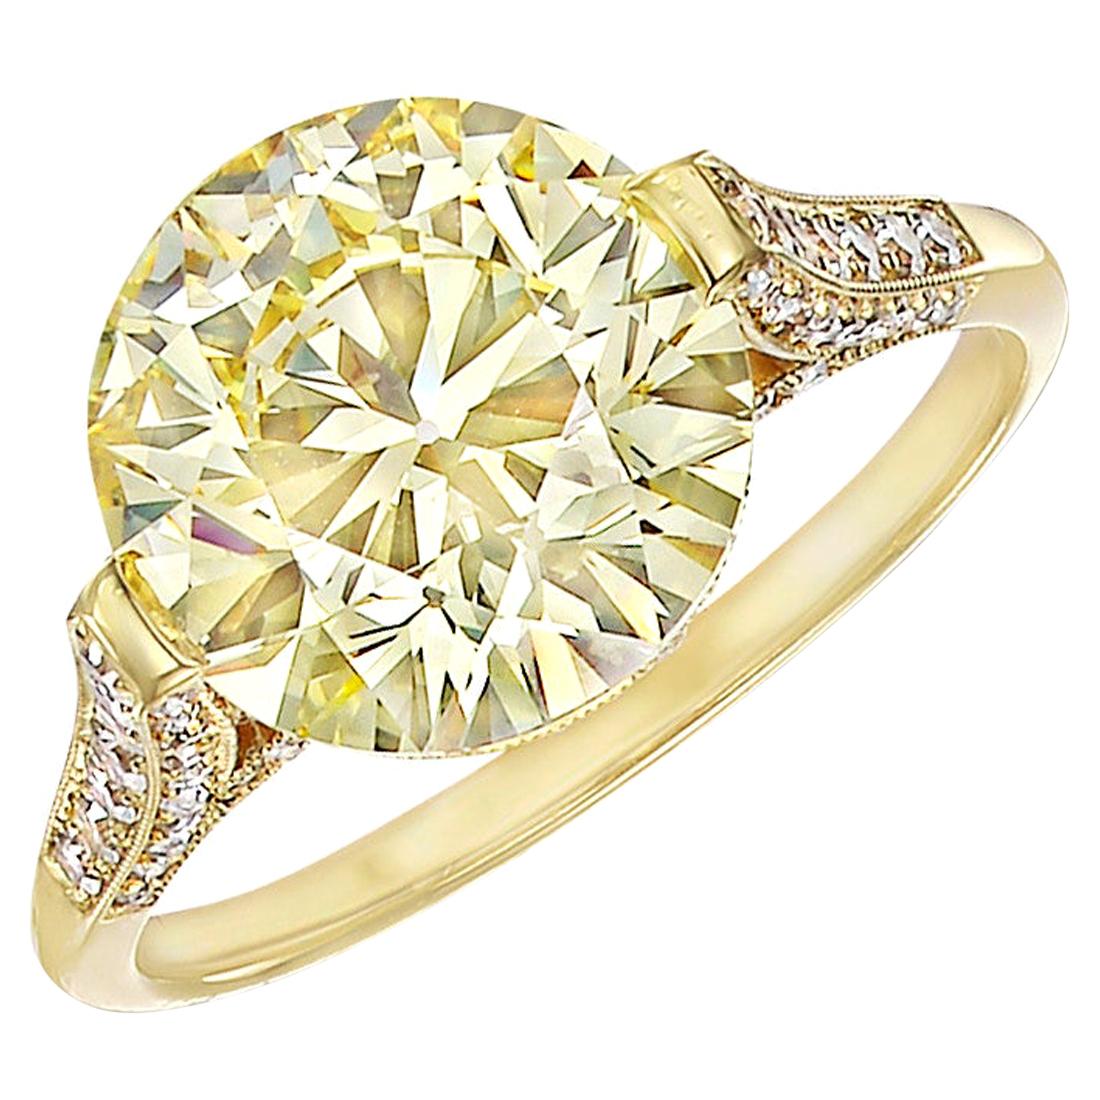 4.62 Carat Fancy Yellow Diamond Engagement Ring